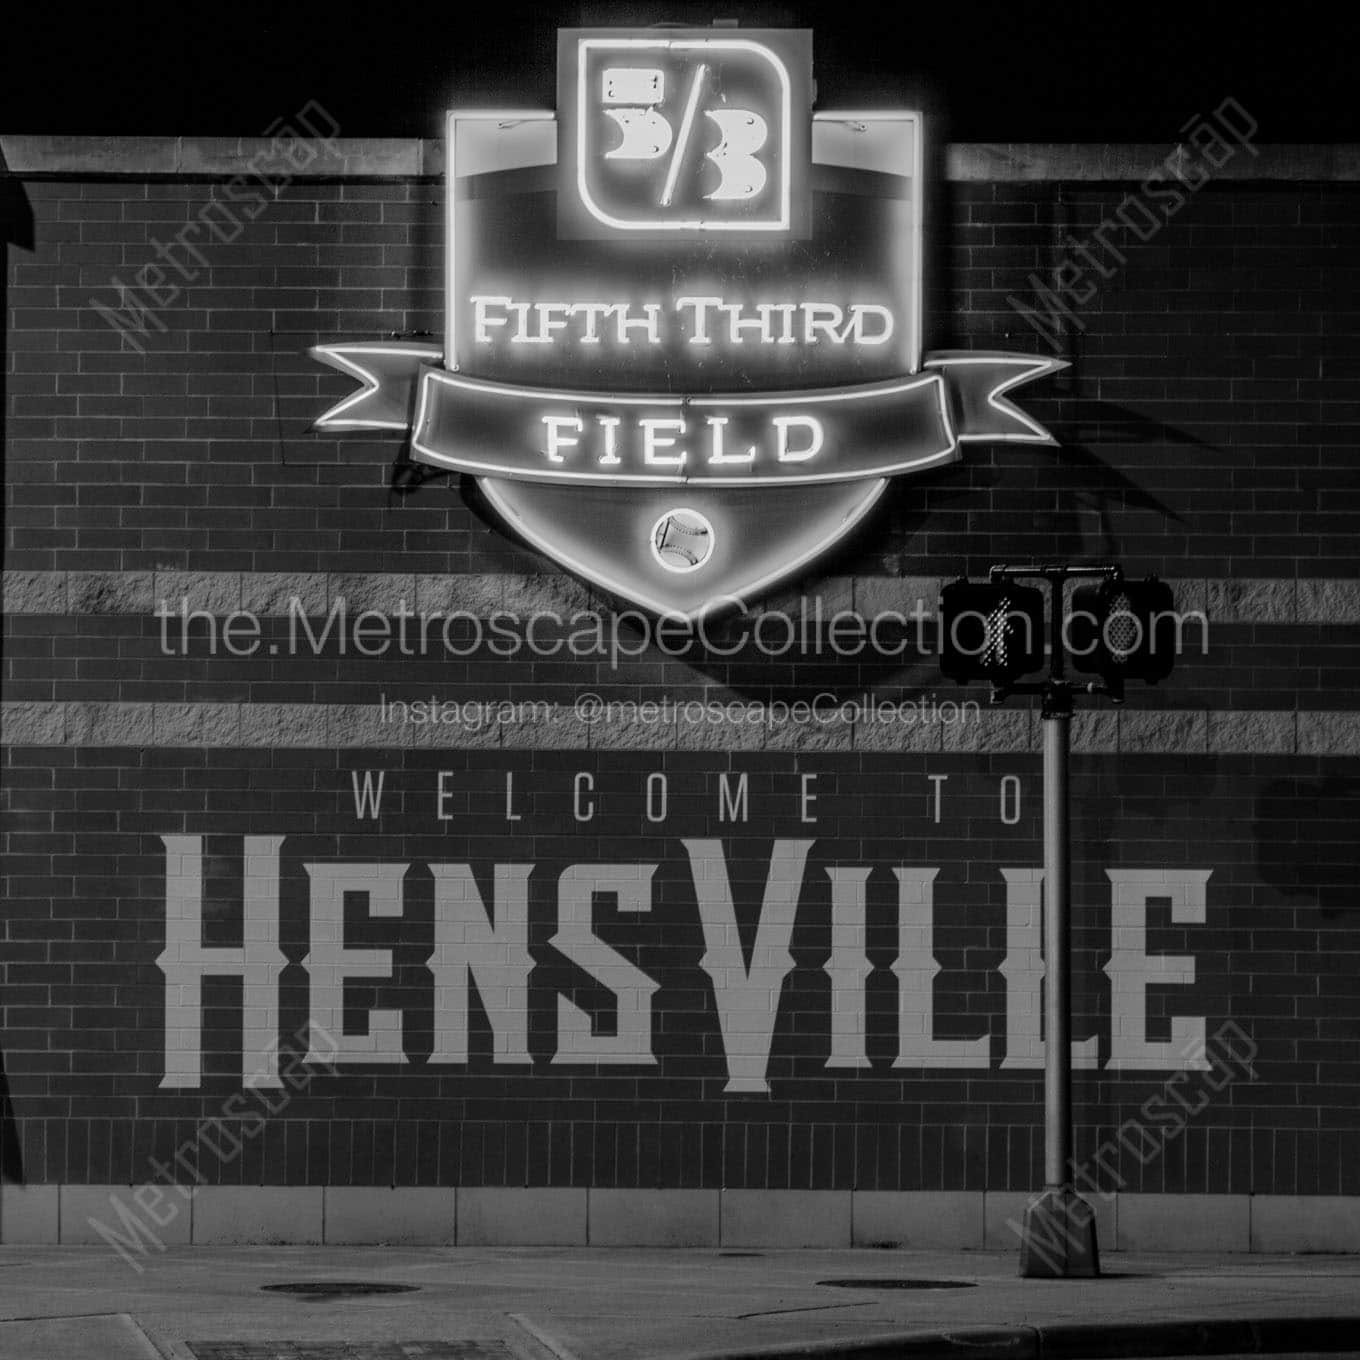 hensville mural fifth third field Black & White Office Art